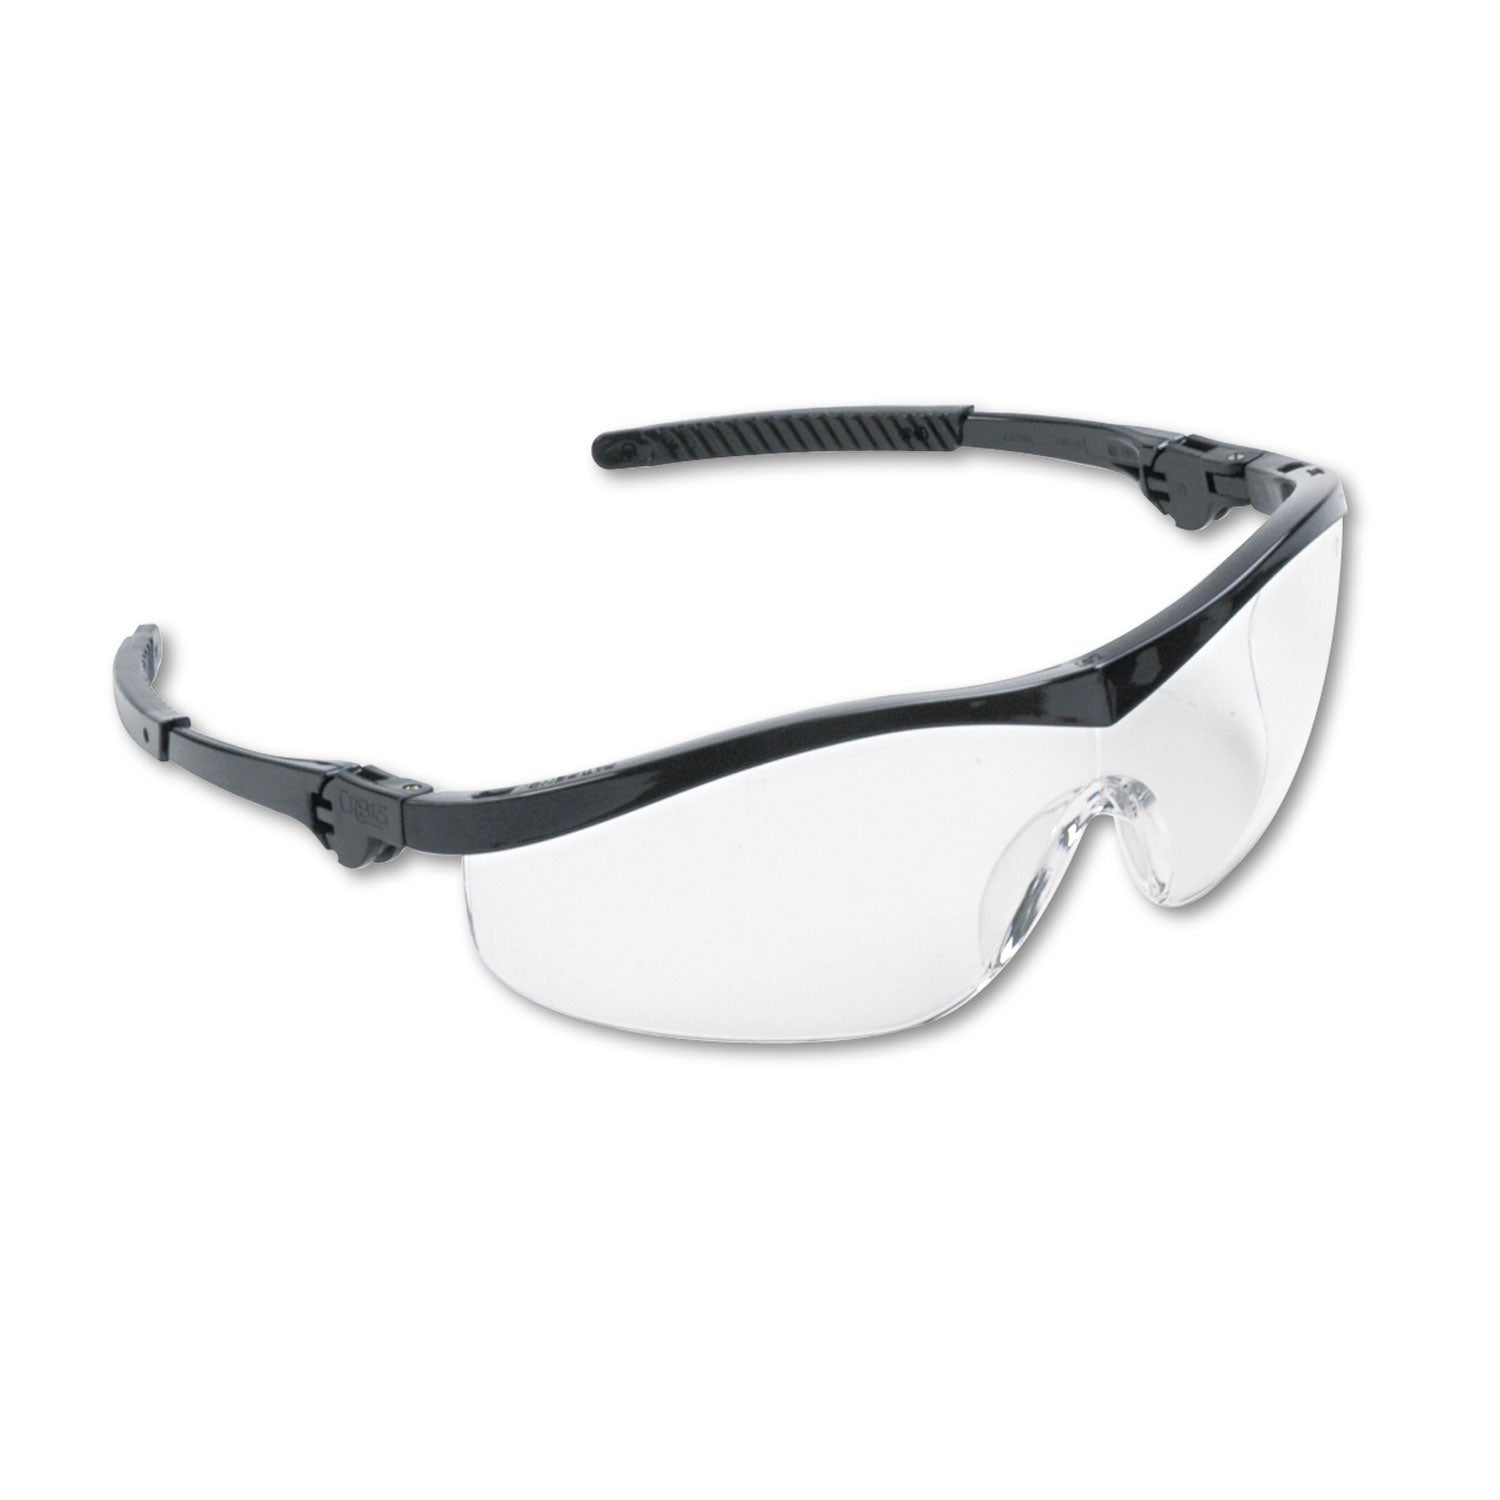 Storm Wraparound Safety Glasses, Black Nylon Frame, Clear Lens, 12/Box - 